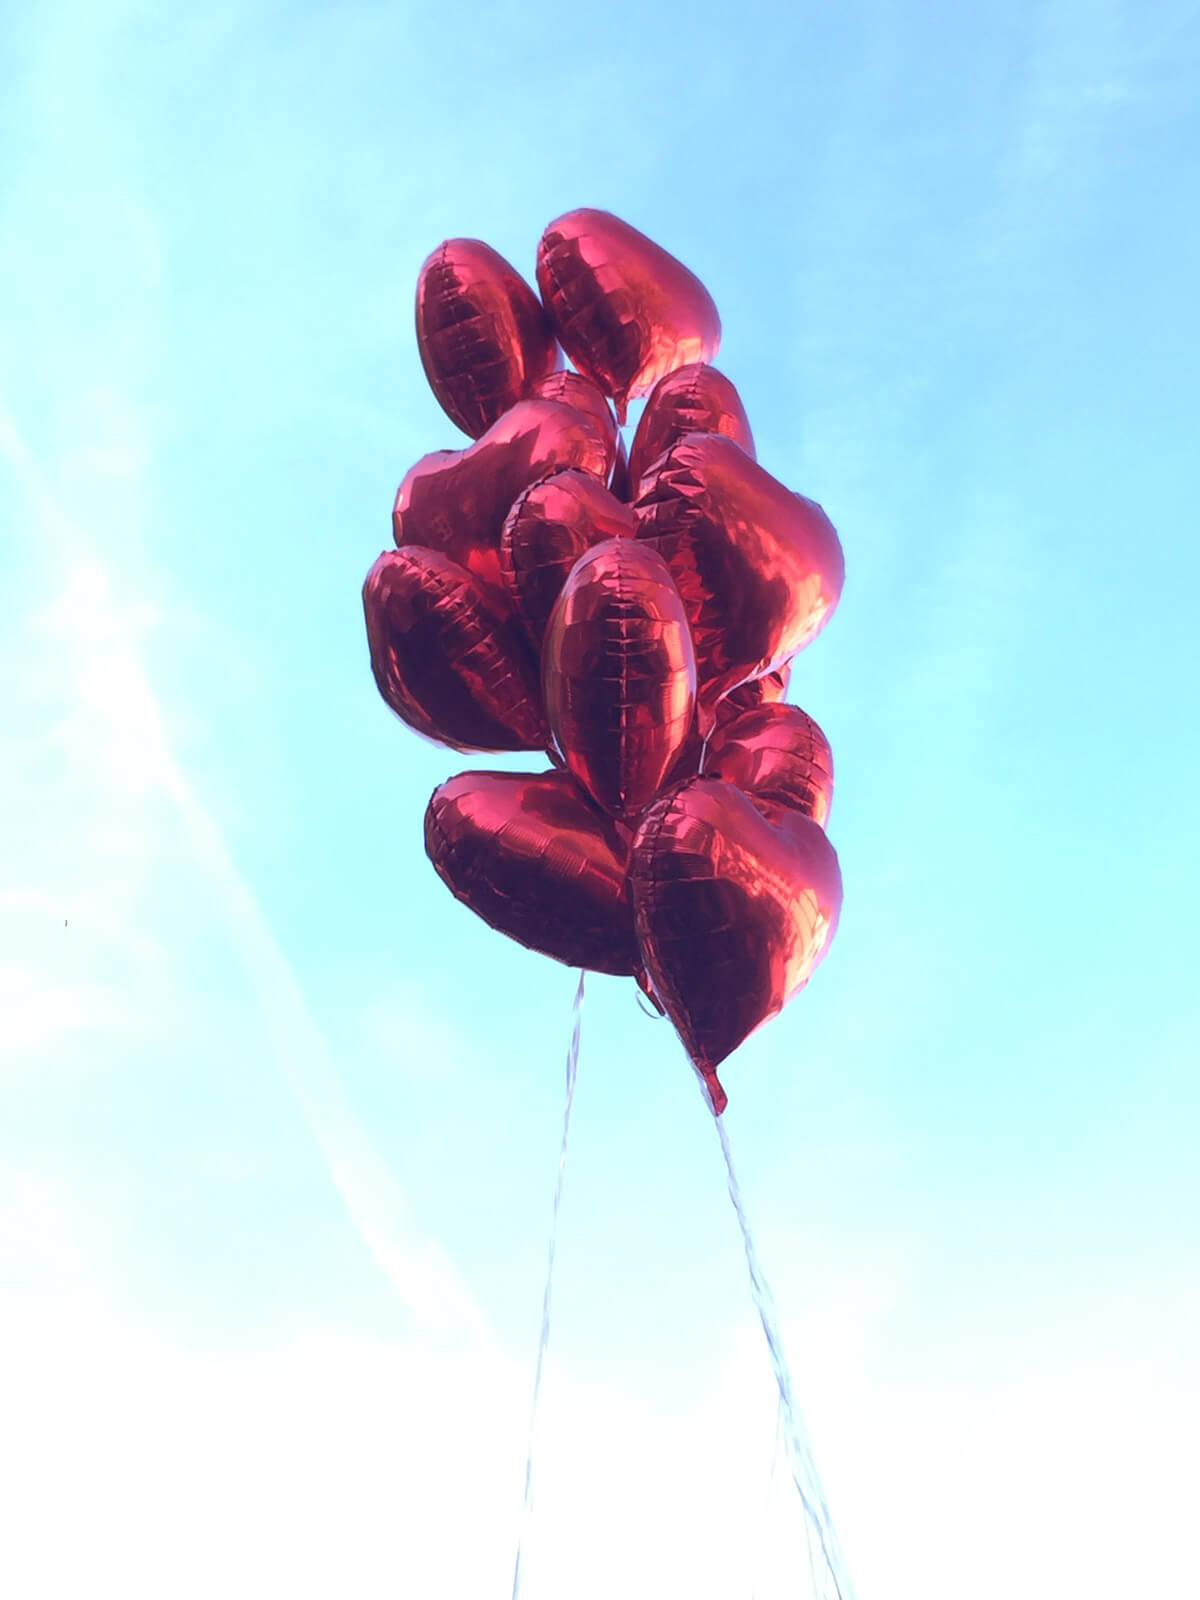 Herzballons vor blauem Himmel